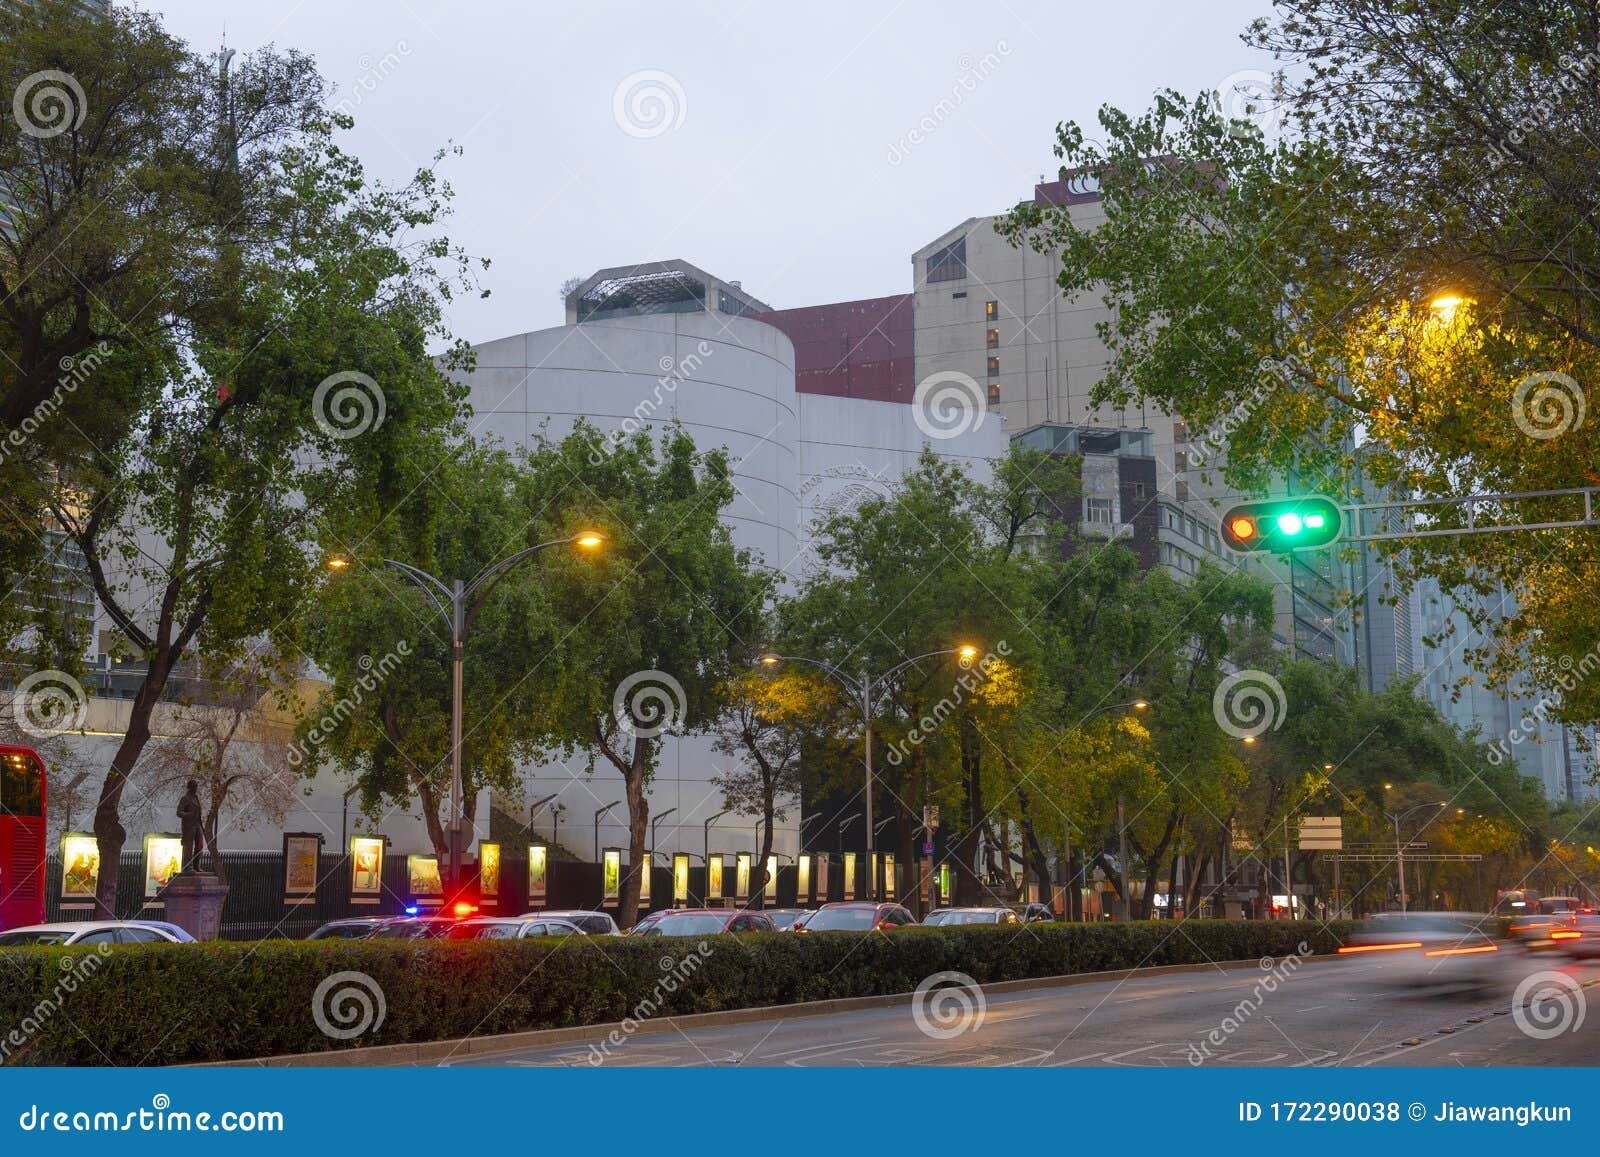 senate palace on reforma avenue, mexico city, mexico